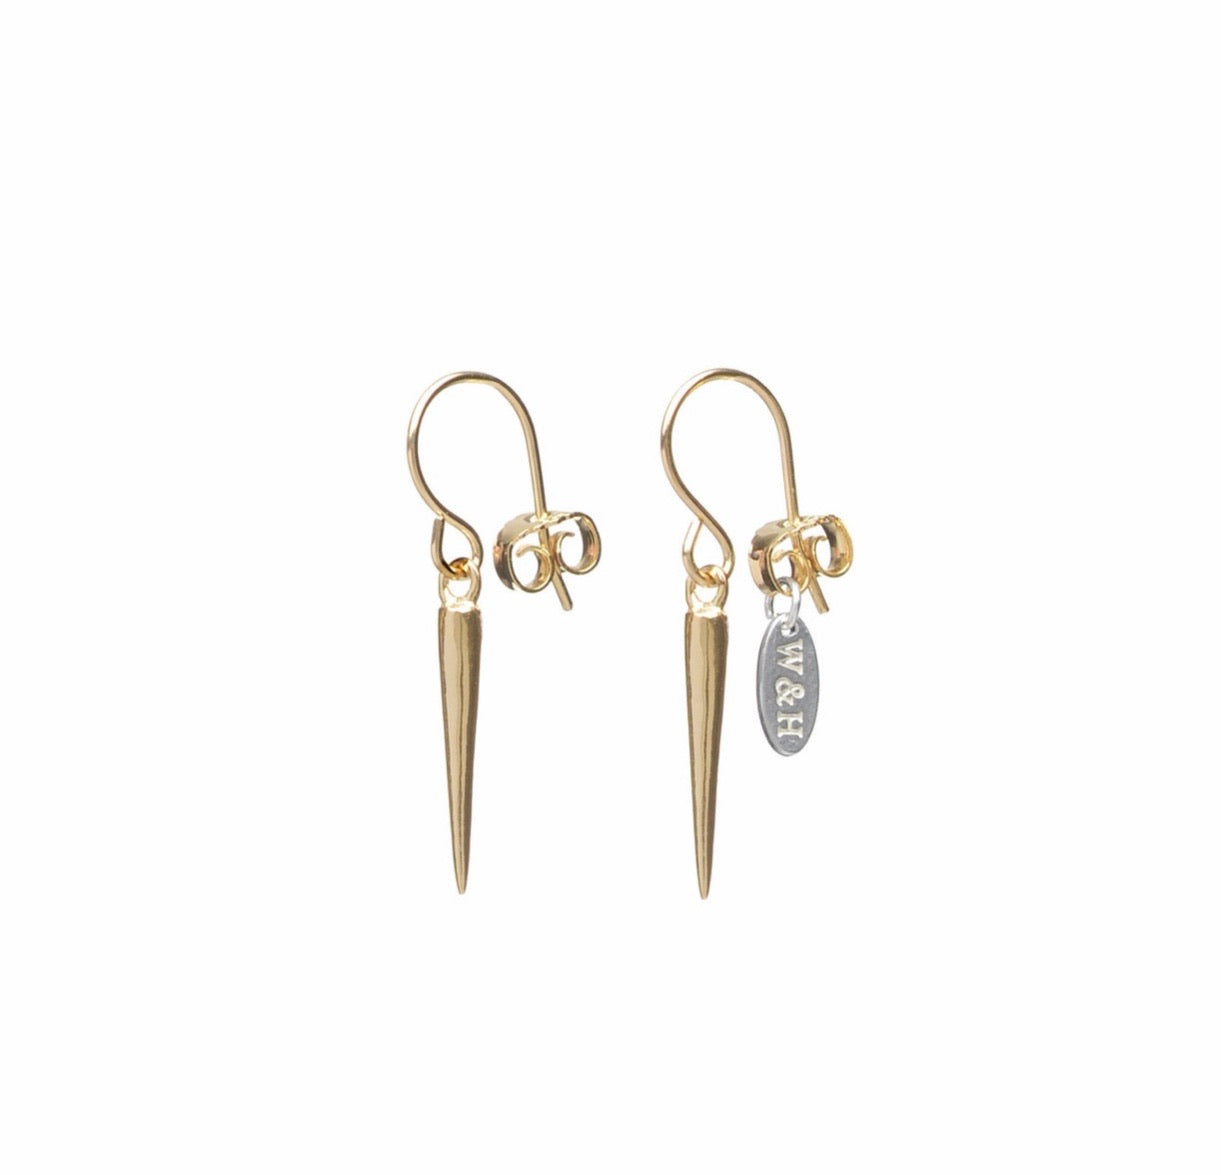 Wouters & Hendrix hook earrings with spike pendant